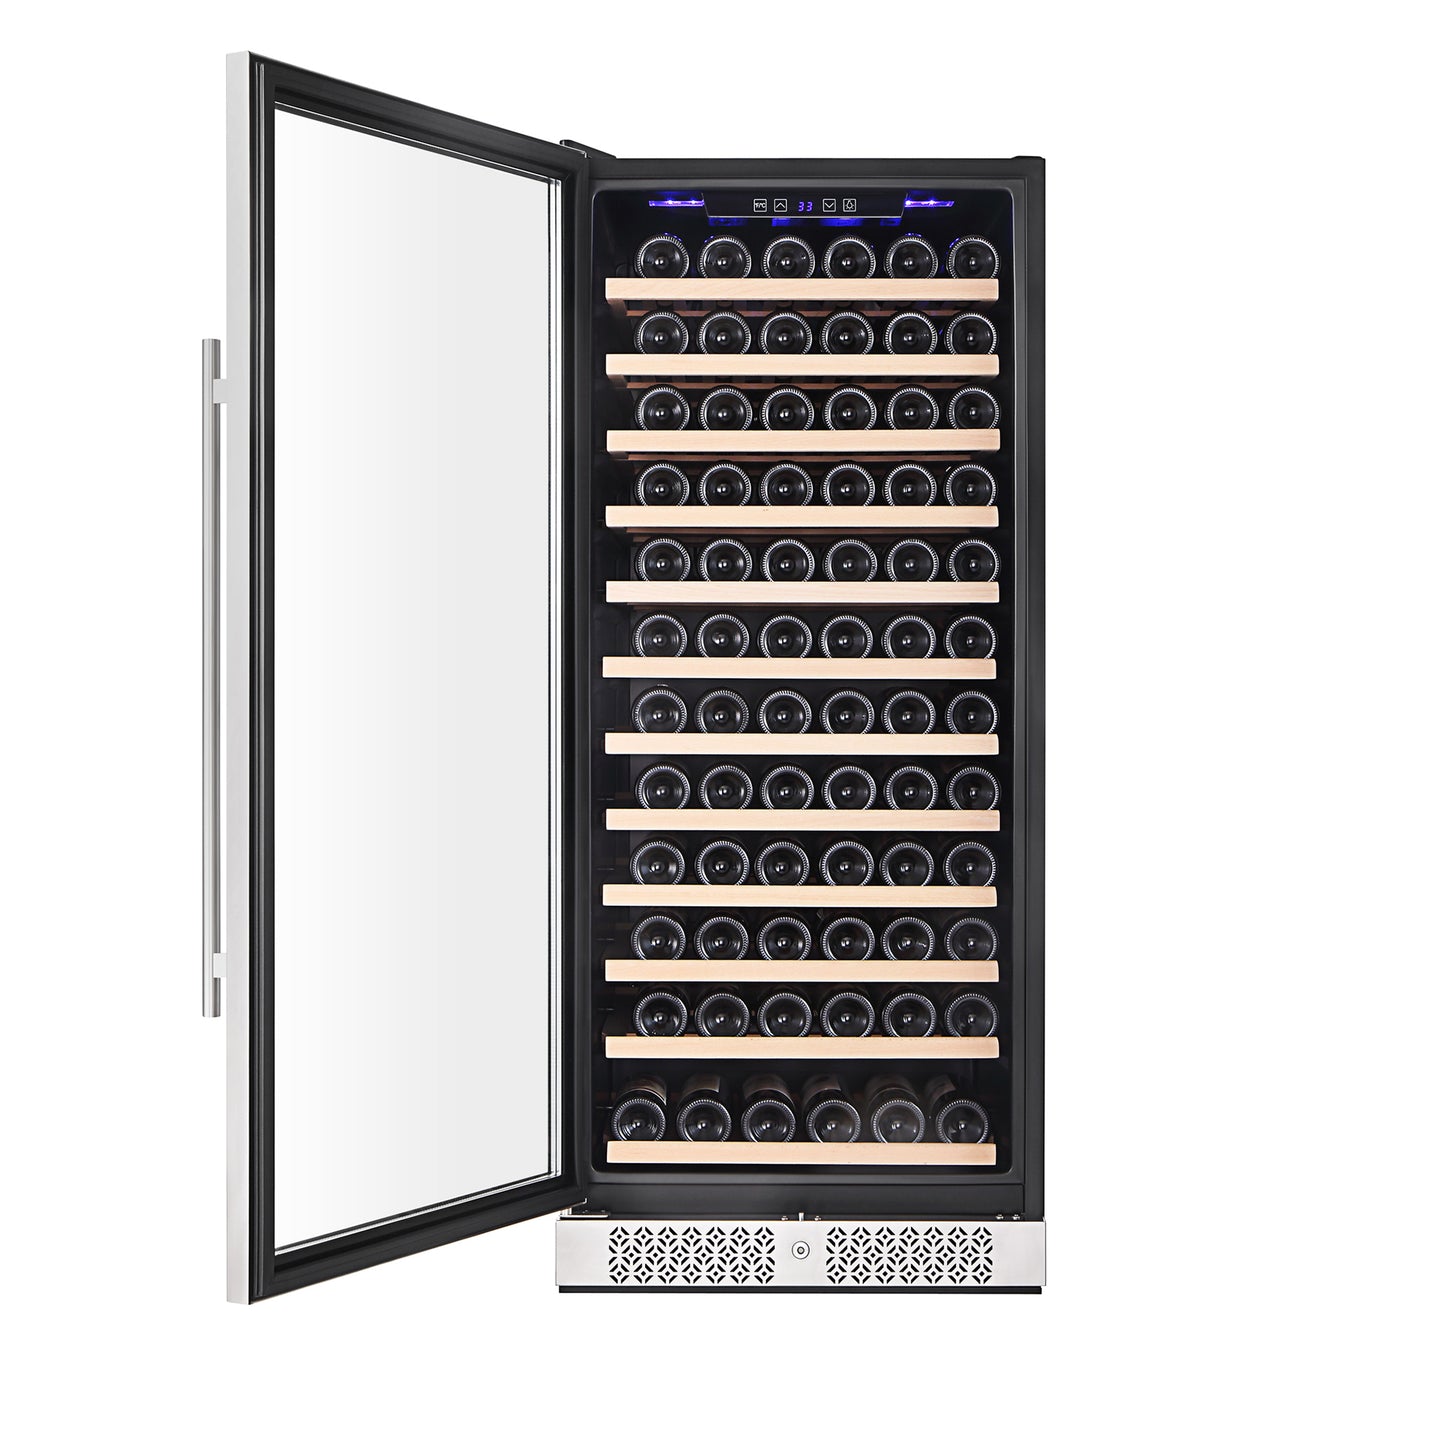 Empava WC05S 24" Wine Cooler 55" Tall Wine Refrigerator